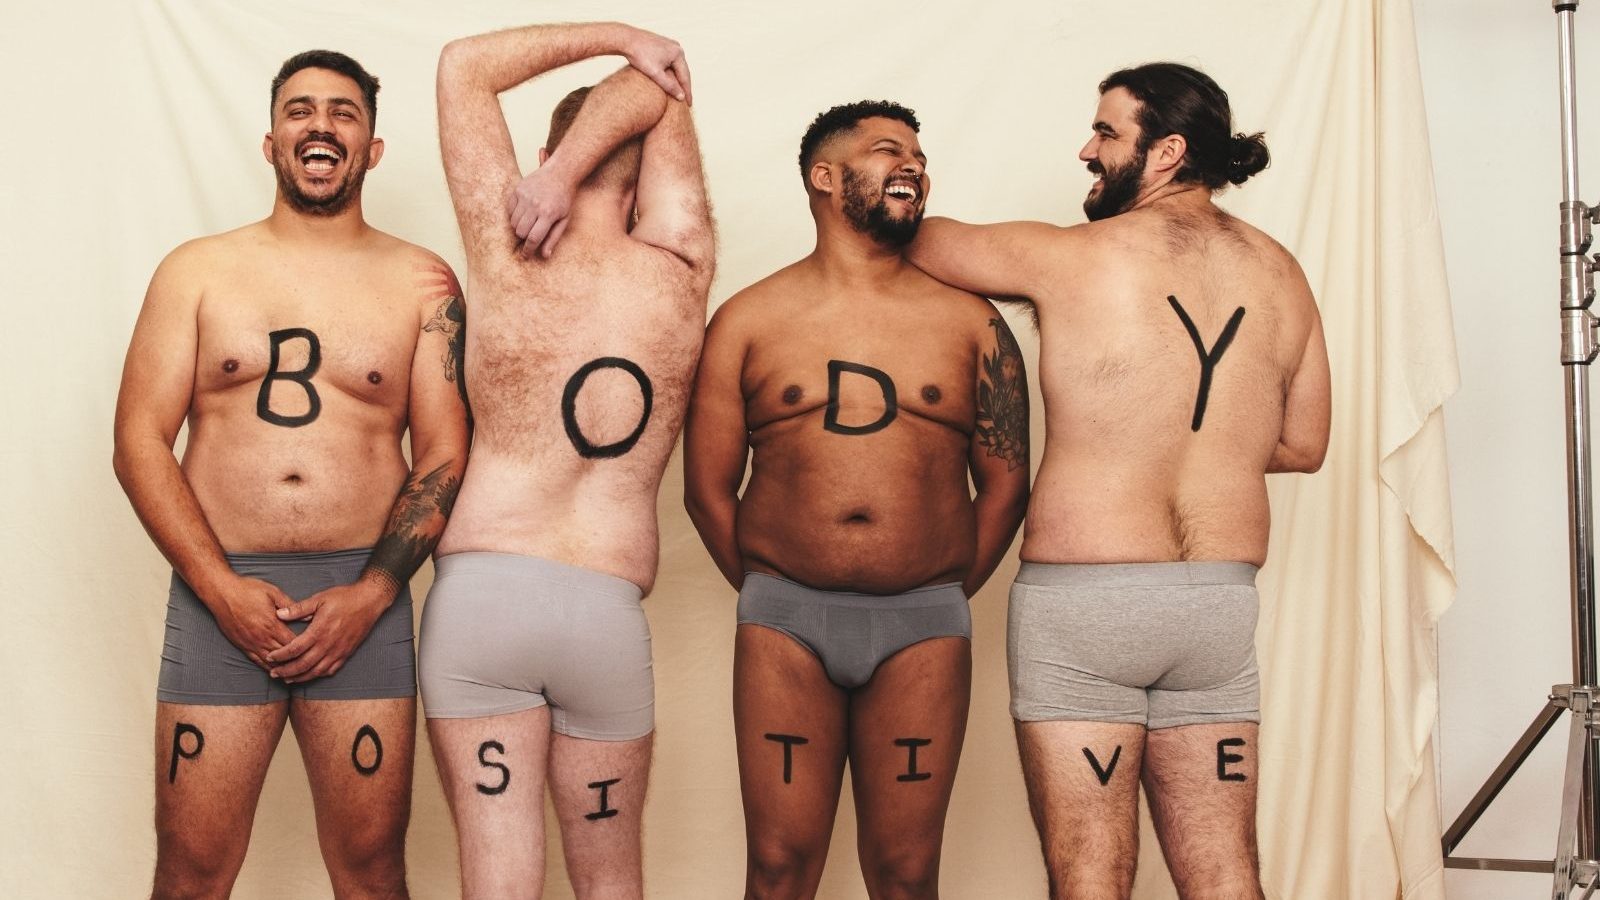 https://images.news18.com/ibnlive/uploads/2021/11/male-body-positivity-1-163730173816x9.jpg